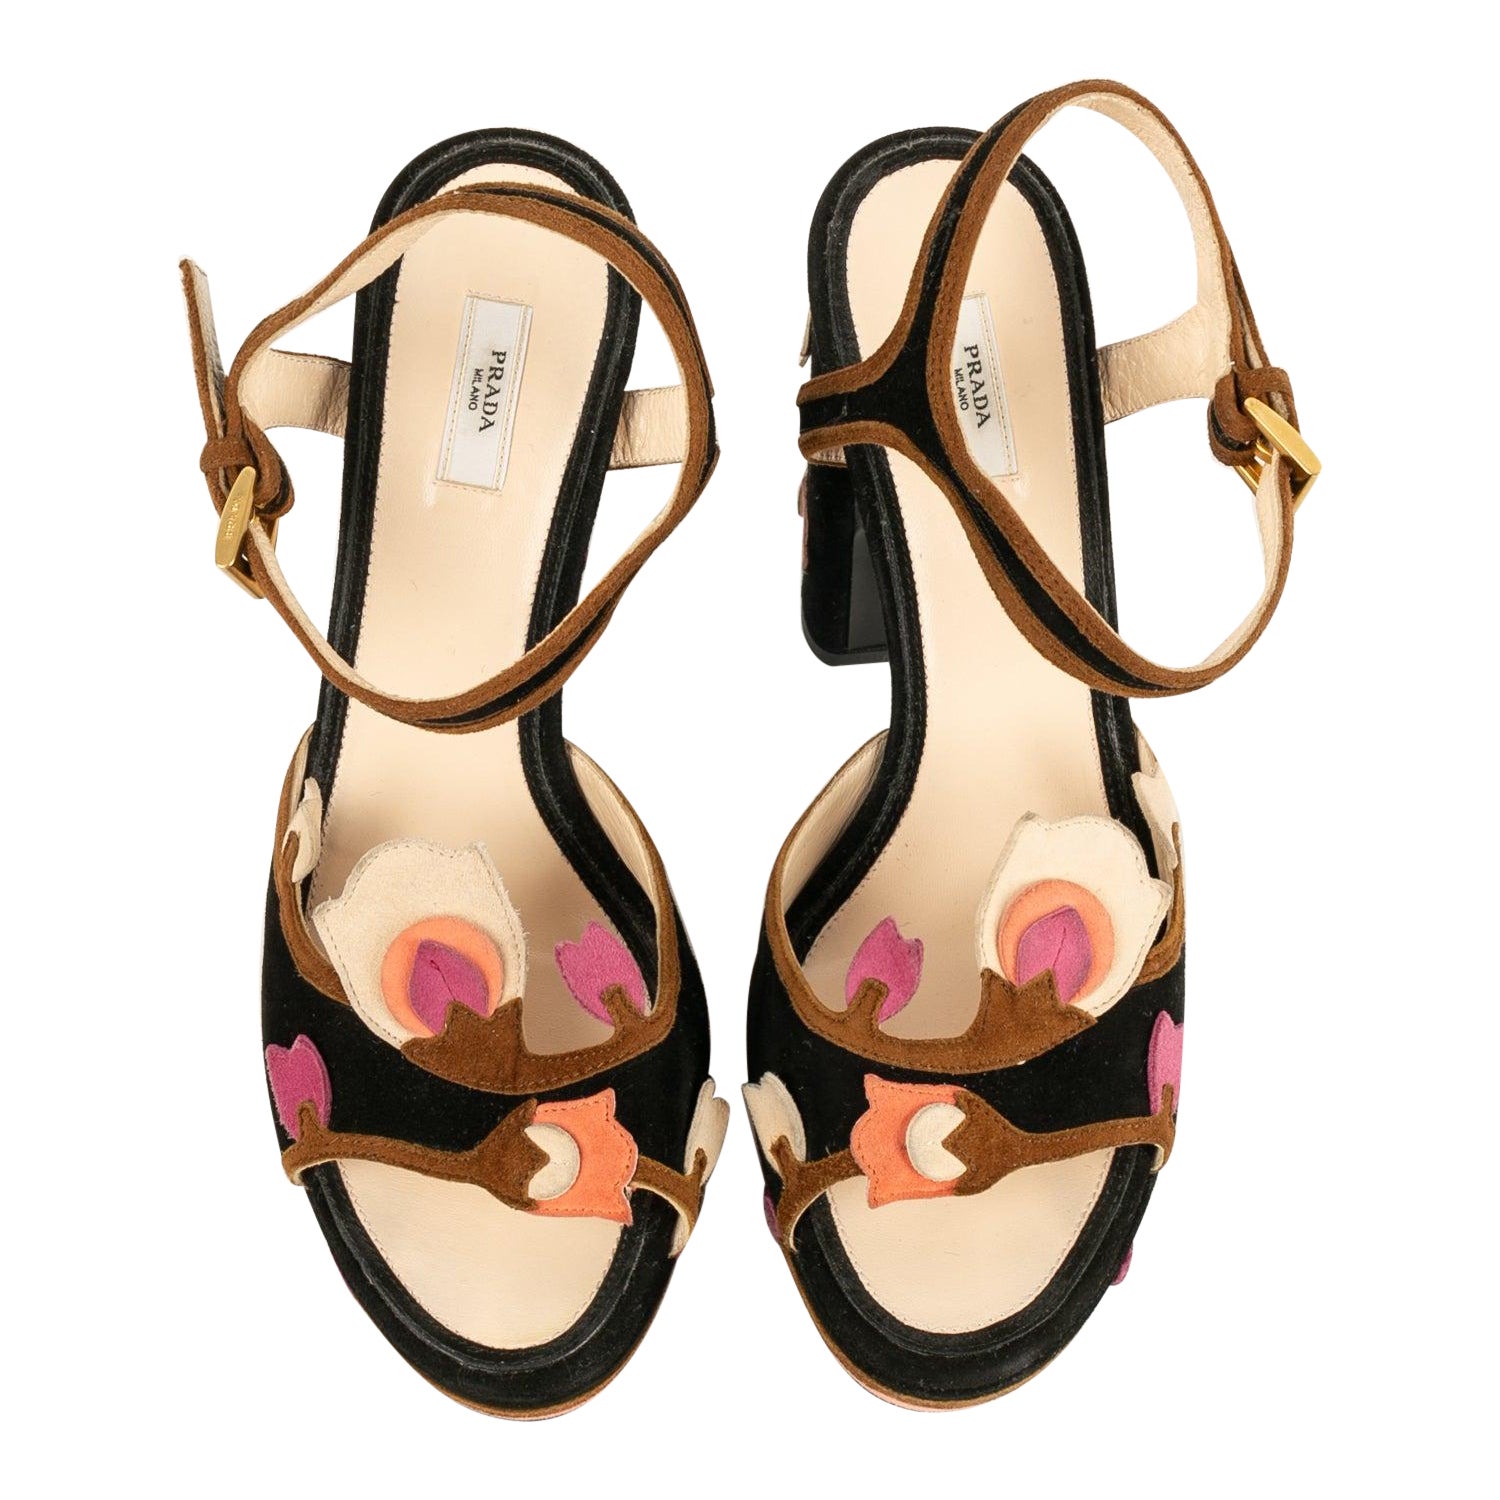 Prada Platform Sandals, Size 37.5